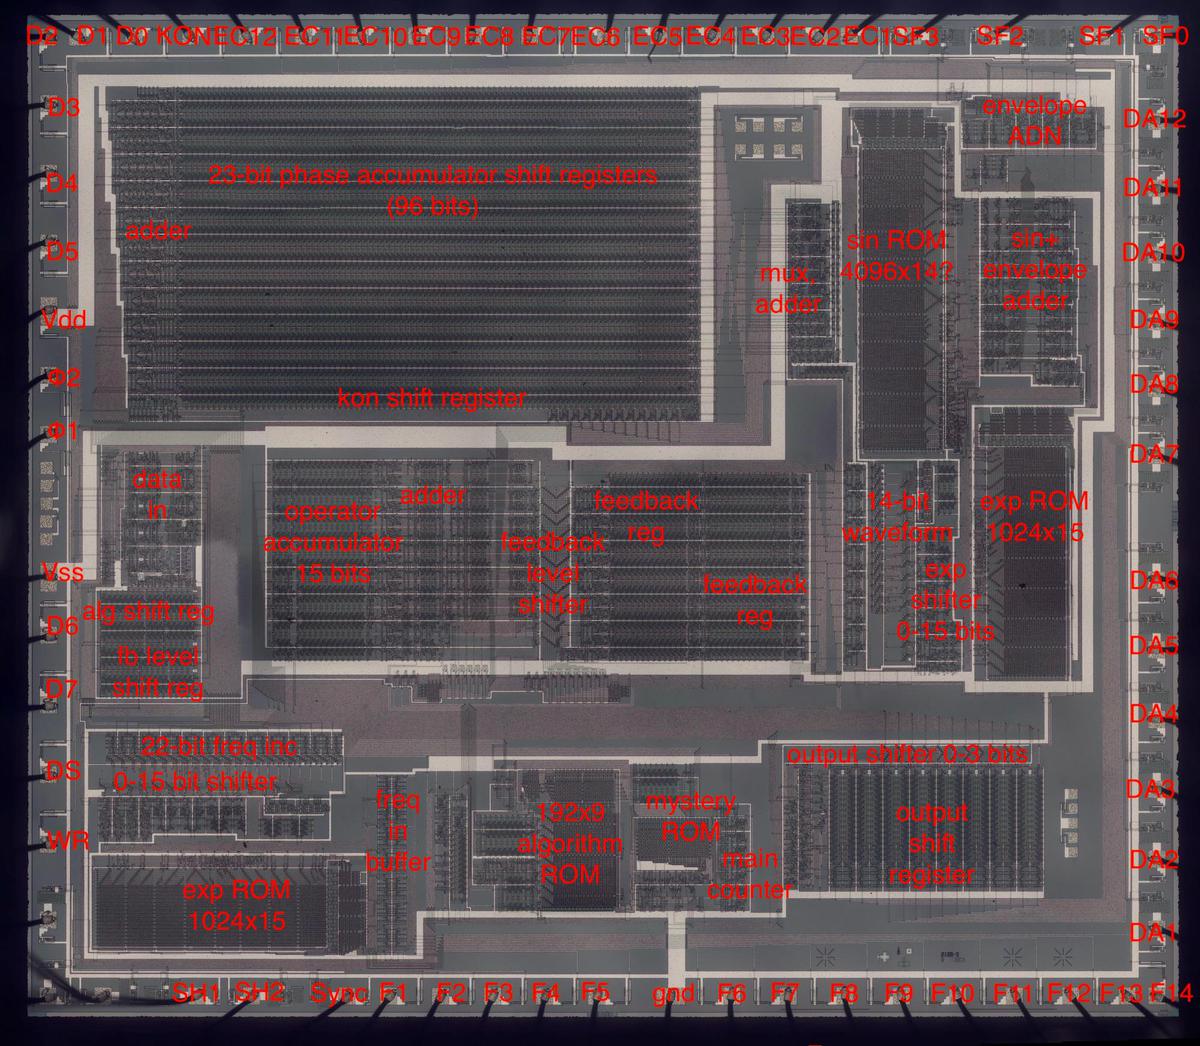 Yamaha DX7 sound chip